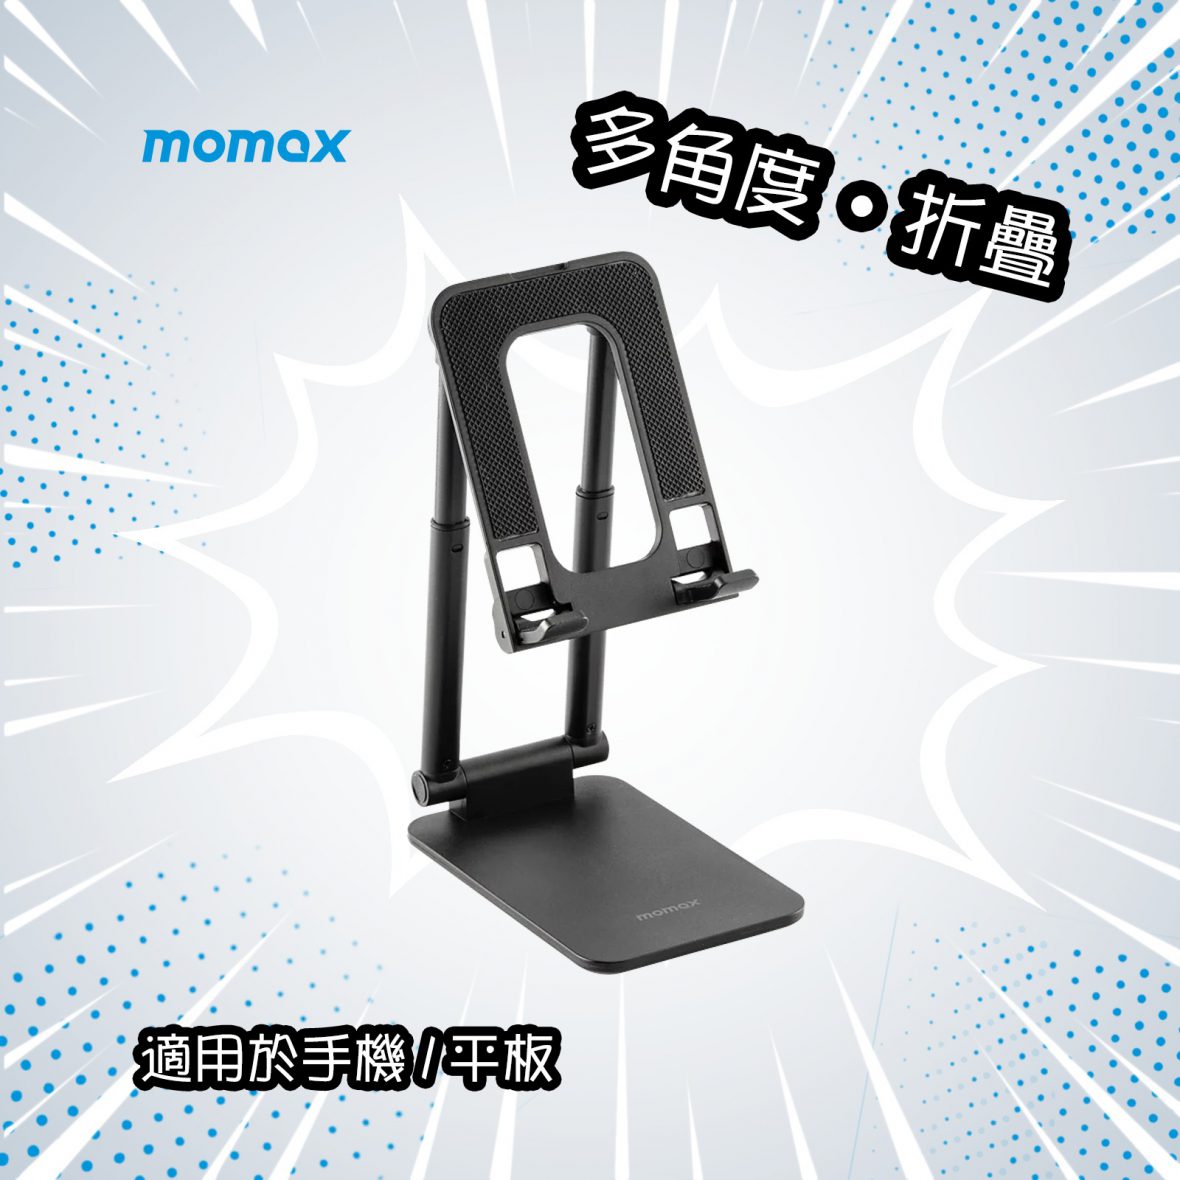 Momax Fold Stand 隨行多用途支架 PS6